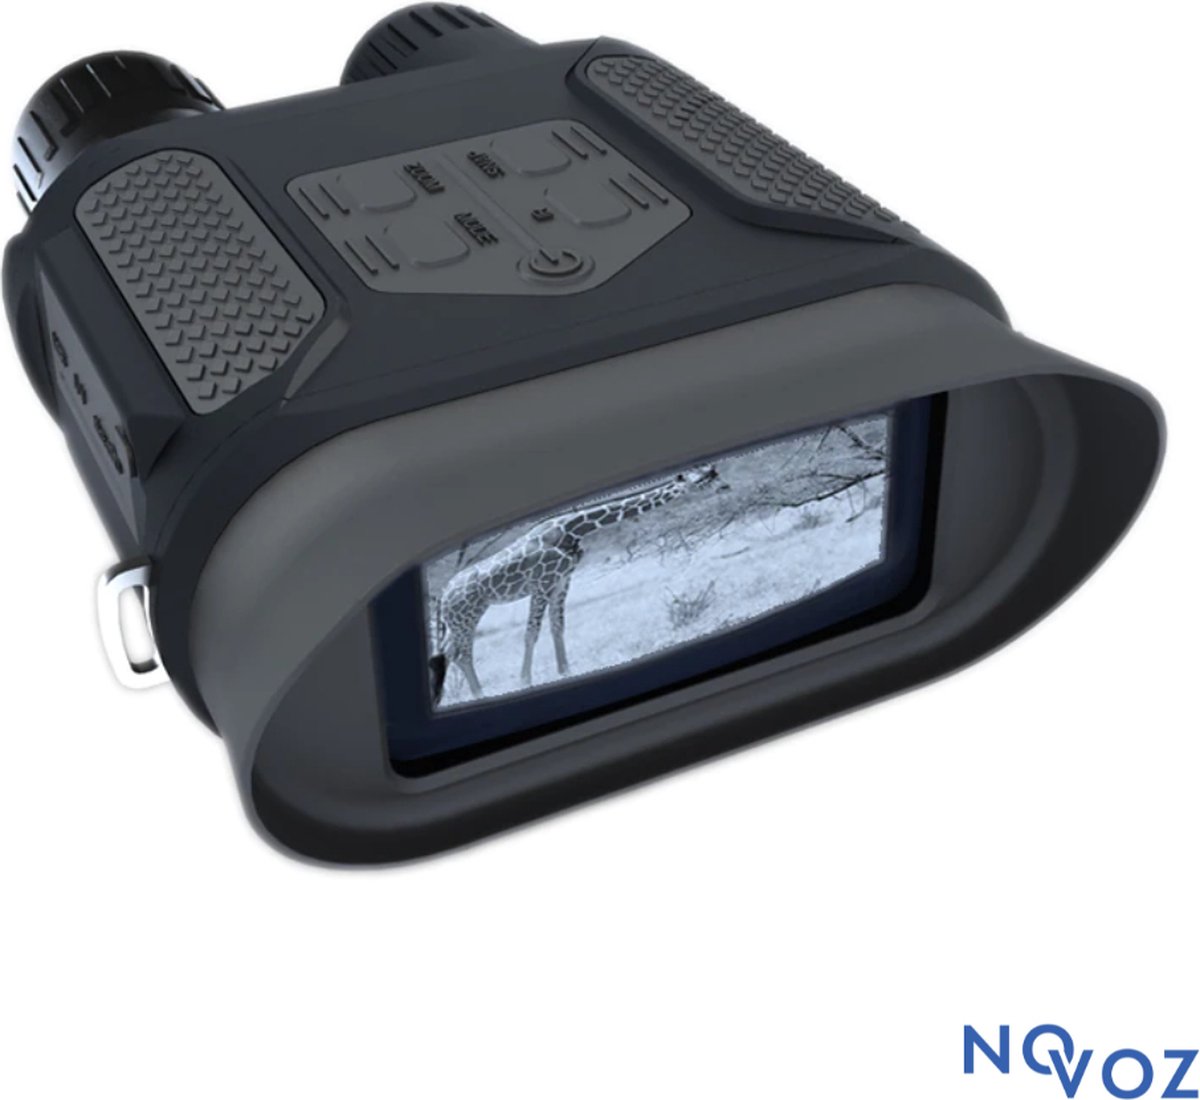 Novoz Nachtkijker Met Infrarood - Nachtkijker - Nachtkijker Warmtebeeld - Infrarood Kijker - Nightvision - 400M